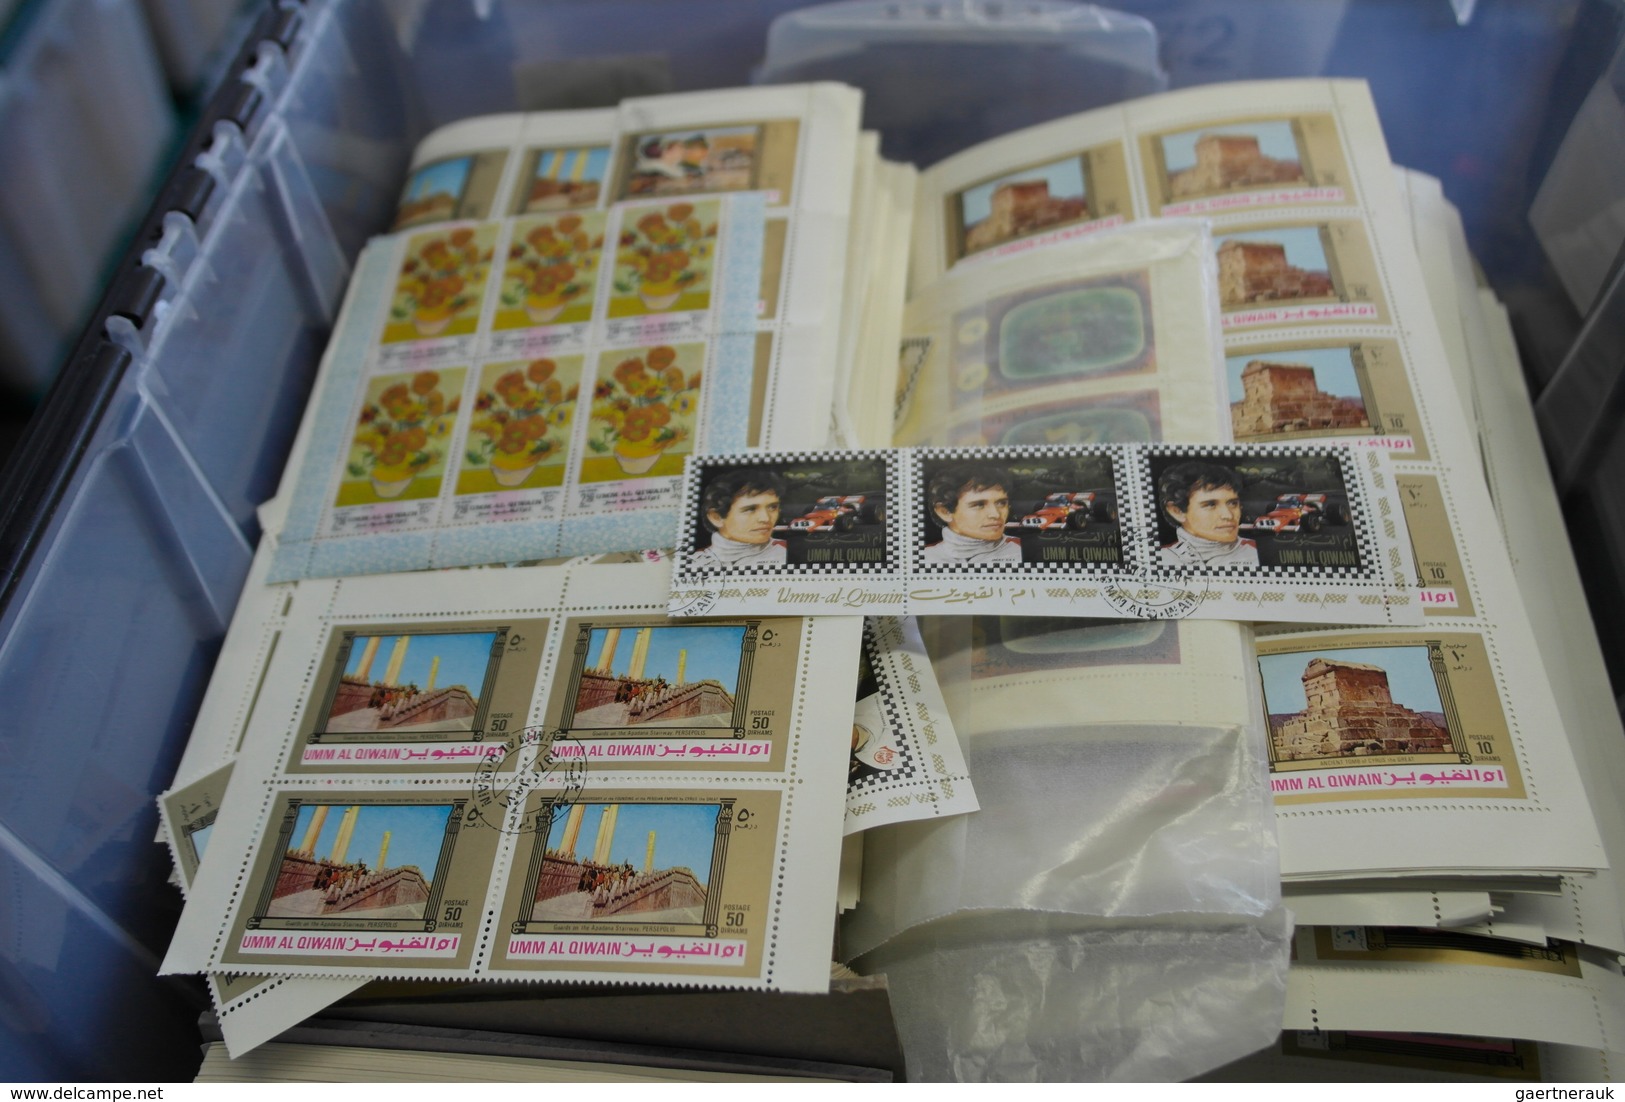 23149 Jemen - Königreich: 1960s, and Ajman, Mahra etc. Phenomenal lot consisting of 245 boxes containing i